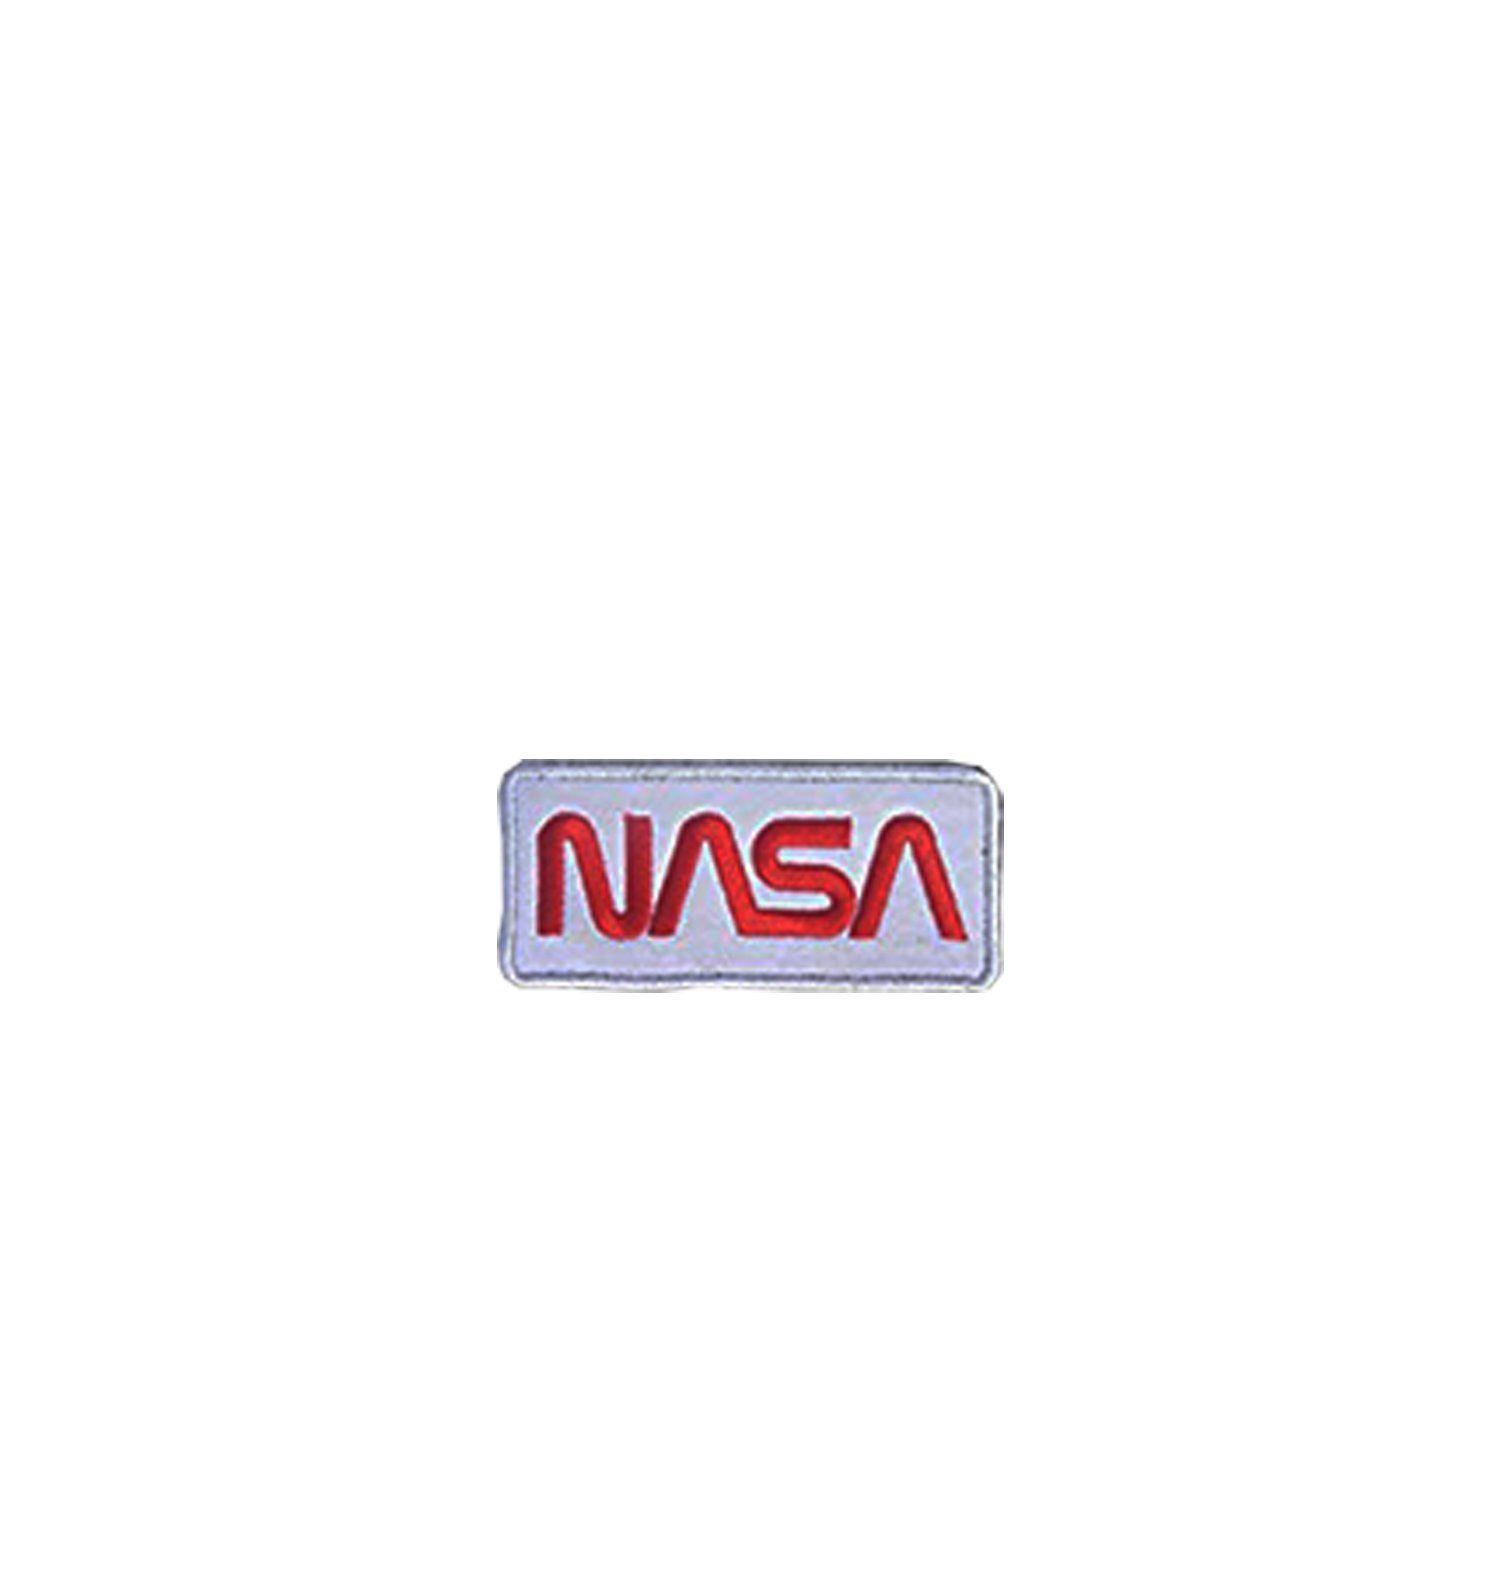 Worm Logo - PATCH - NASA WORM LOGO - STAR CADET